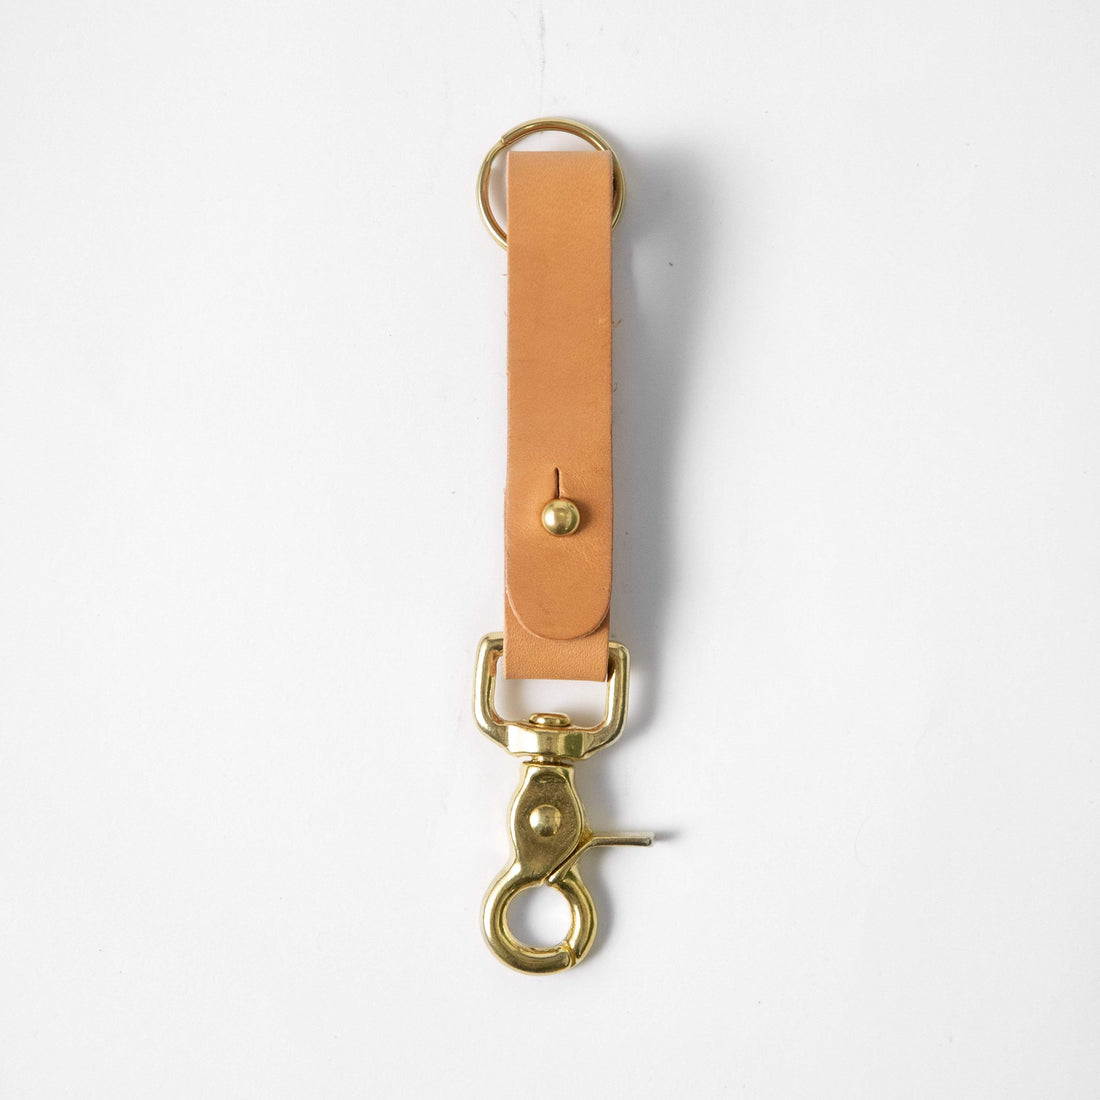 88119 Zip Code Stamped Leather Keychain Key Fob Black – Tangerine Fox Market